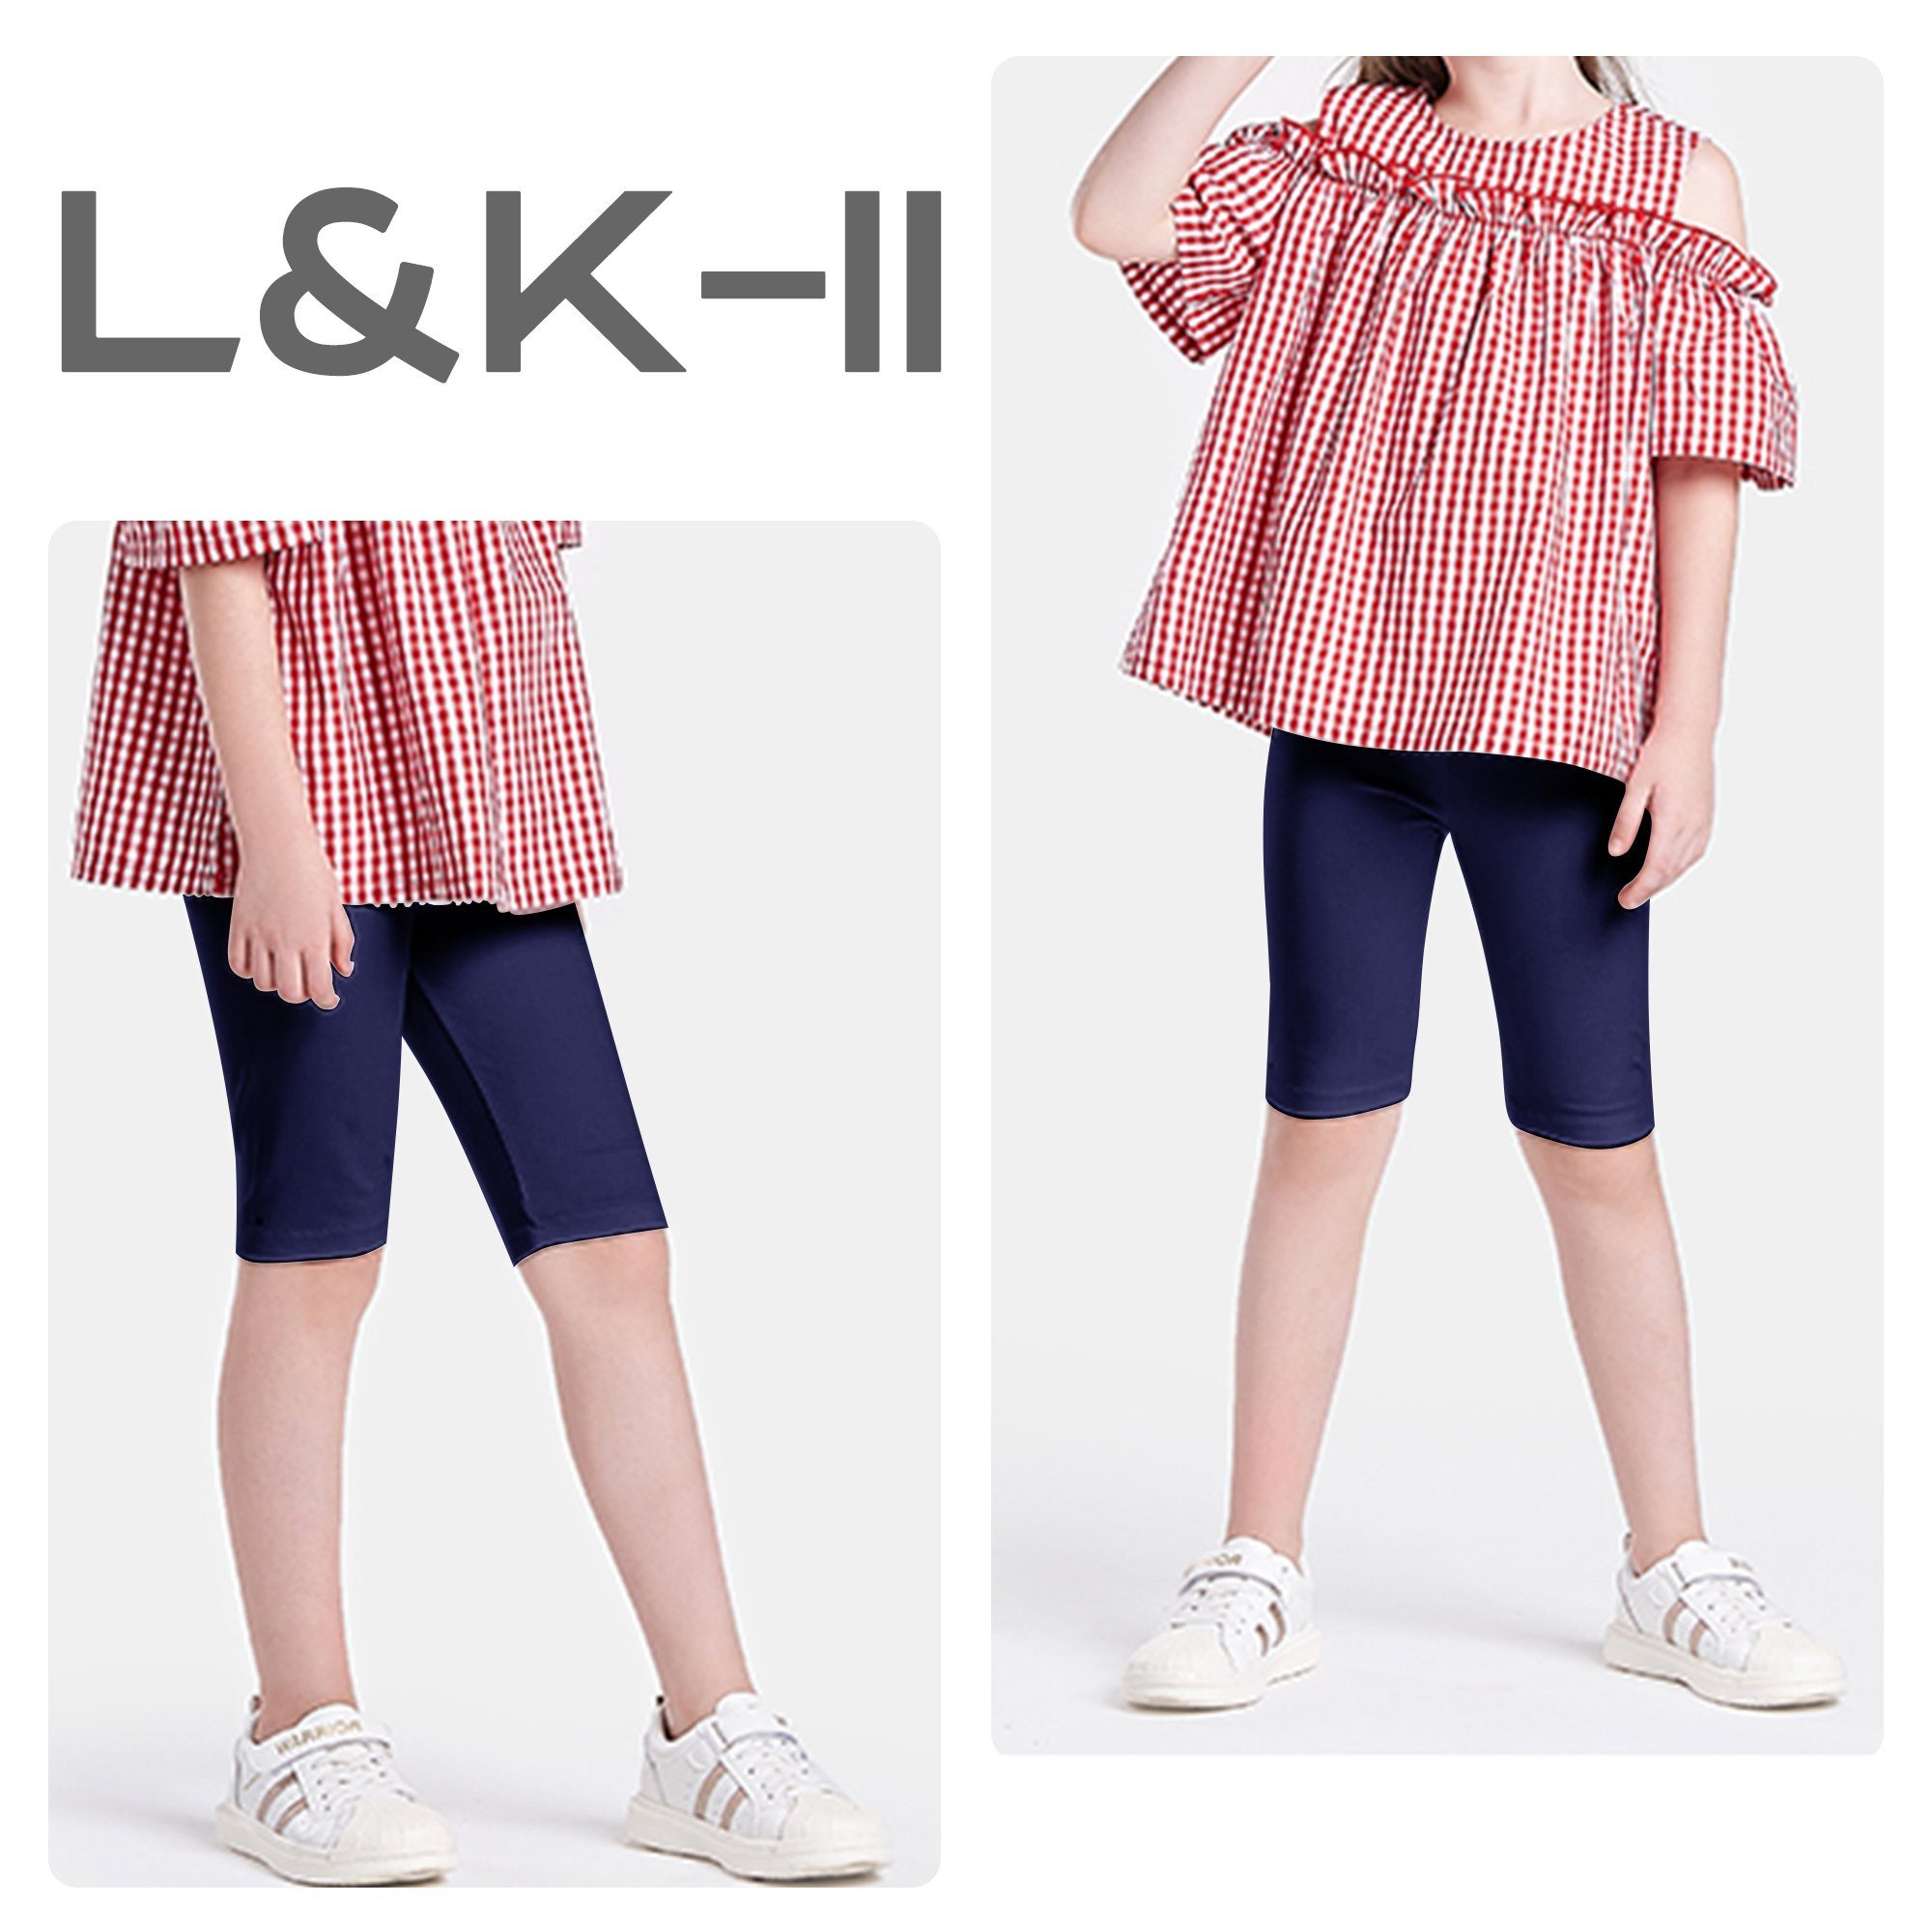 L&K-II Radlerhose 4532 (1er-Pack) aus Dunkelblau Radlerhose Mädchen Baumwolle Leggings Kurz